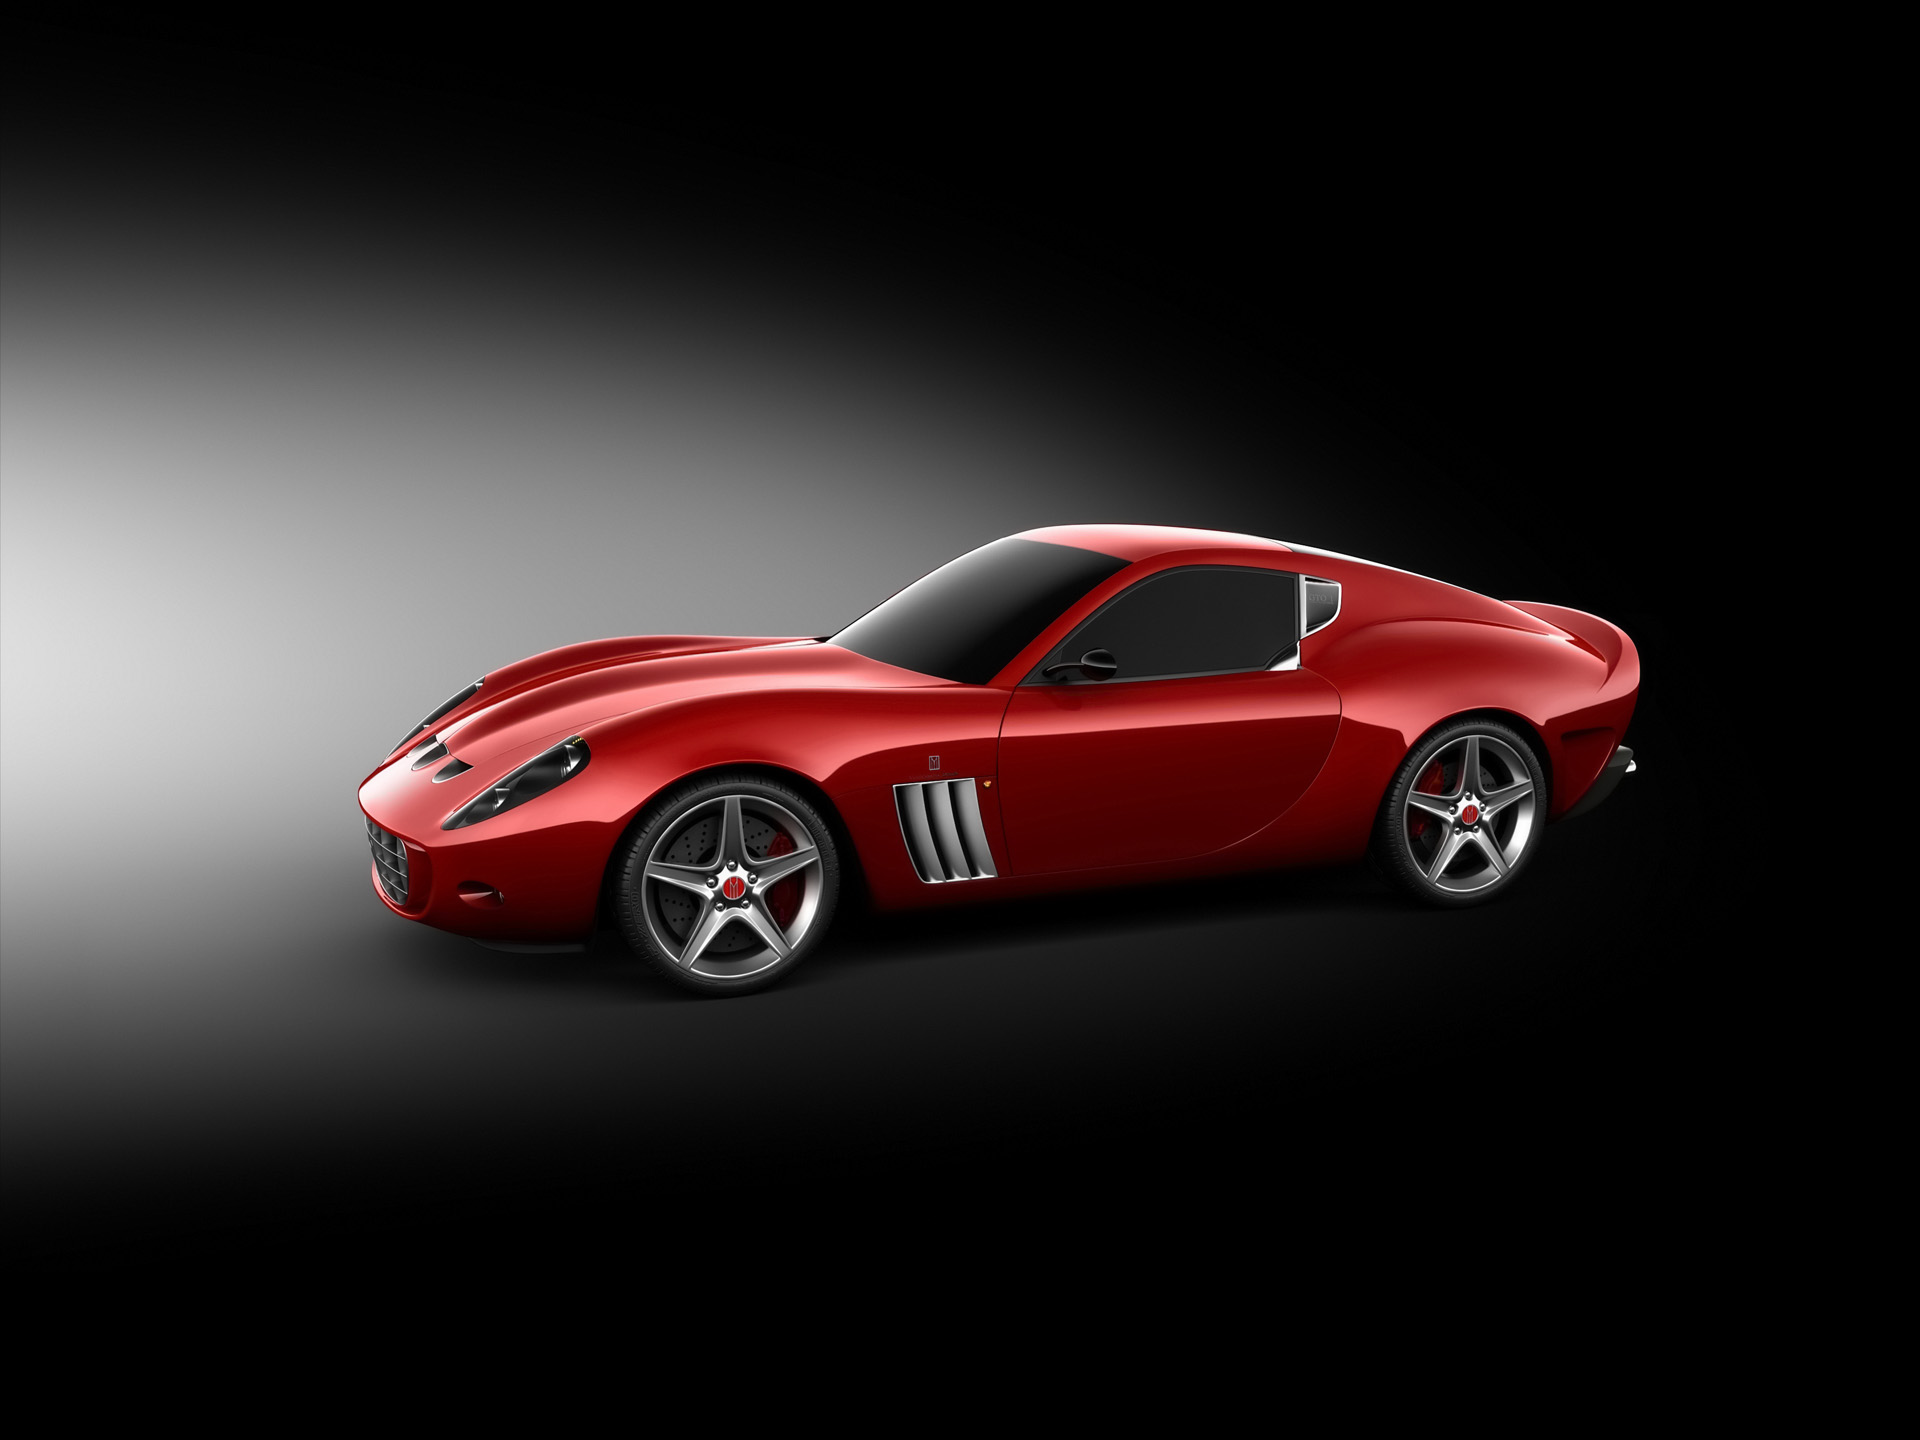 2009-Vandenbrink-Ferrari-599-GTO-Side-Angle-1920x1440.jpg